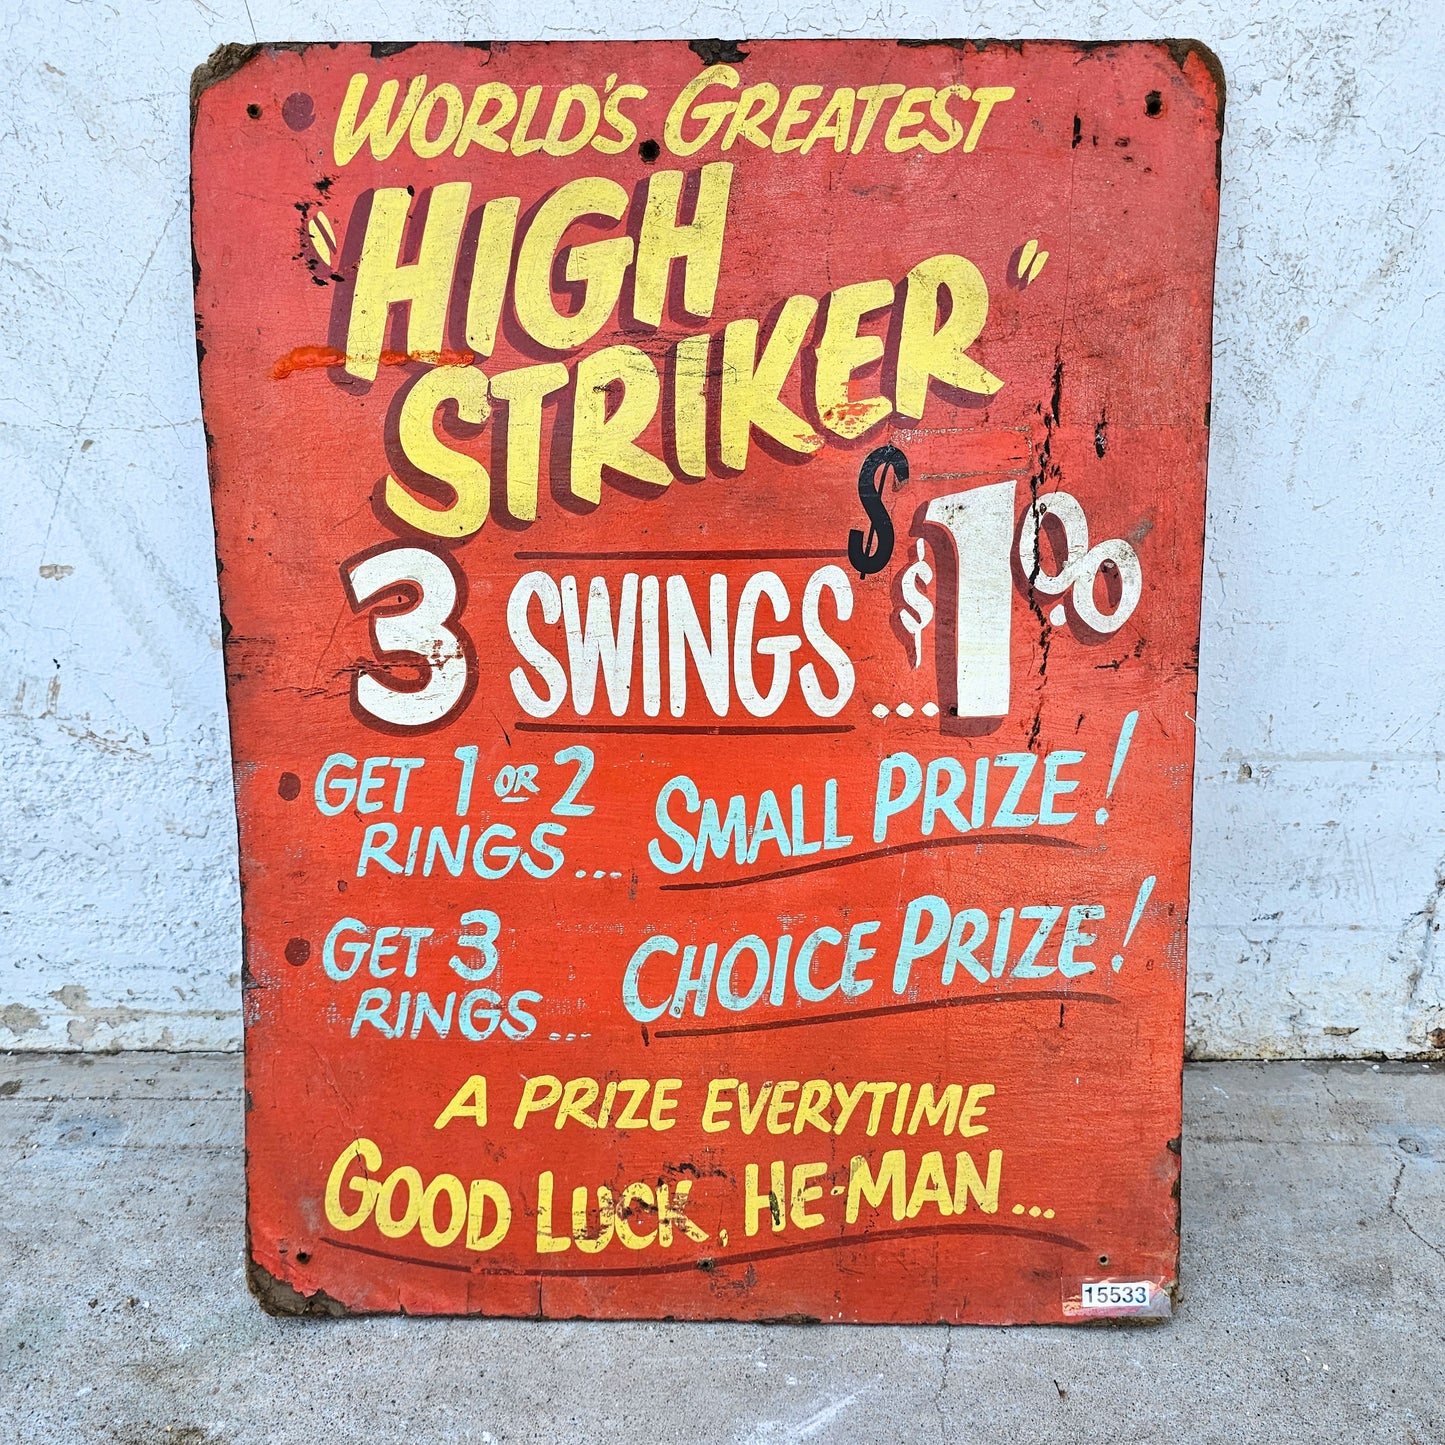 World's Greatest "High Striker" Carnival Sign